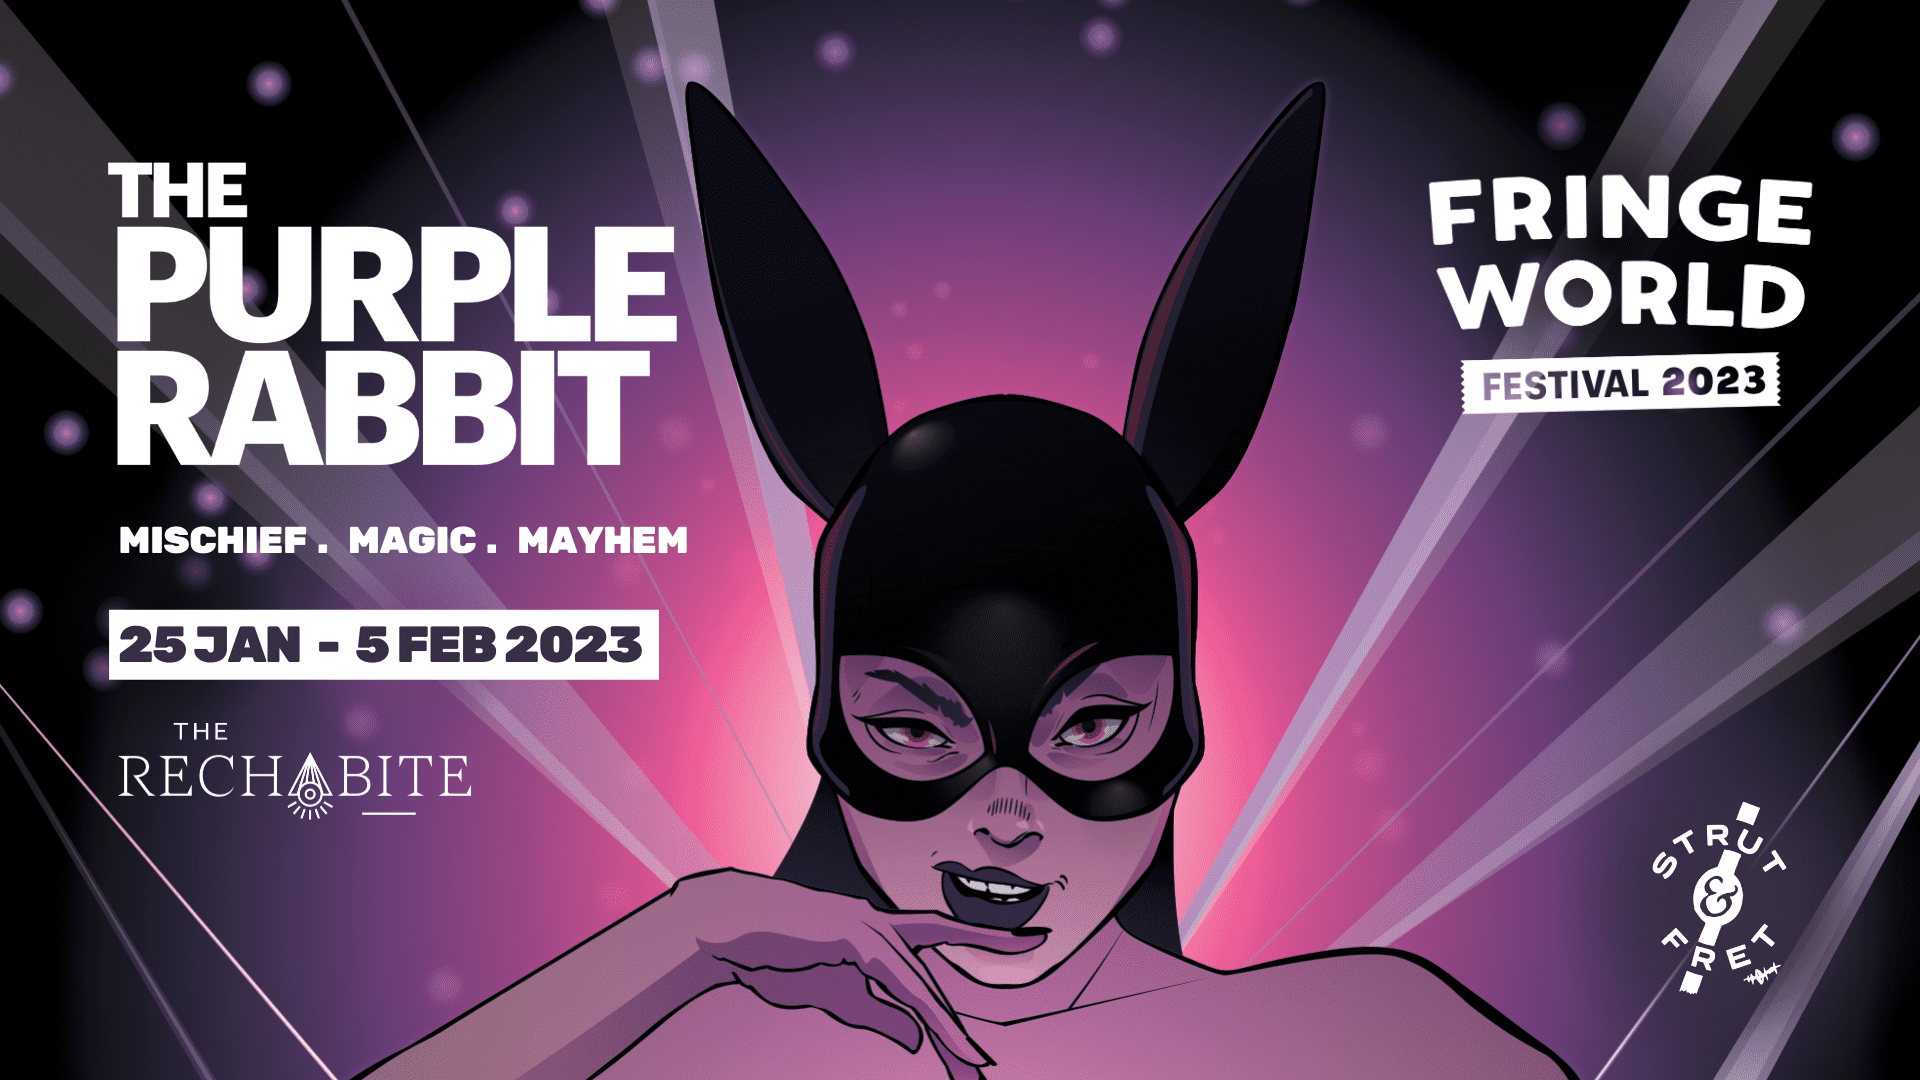 The Purple Rabbit Fringe World Perth 2023